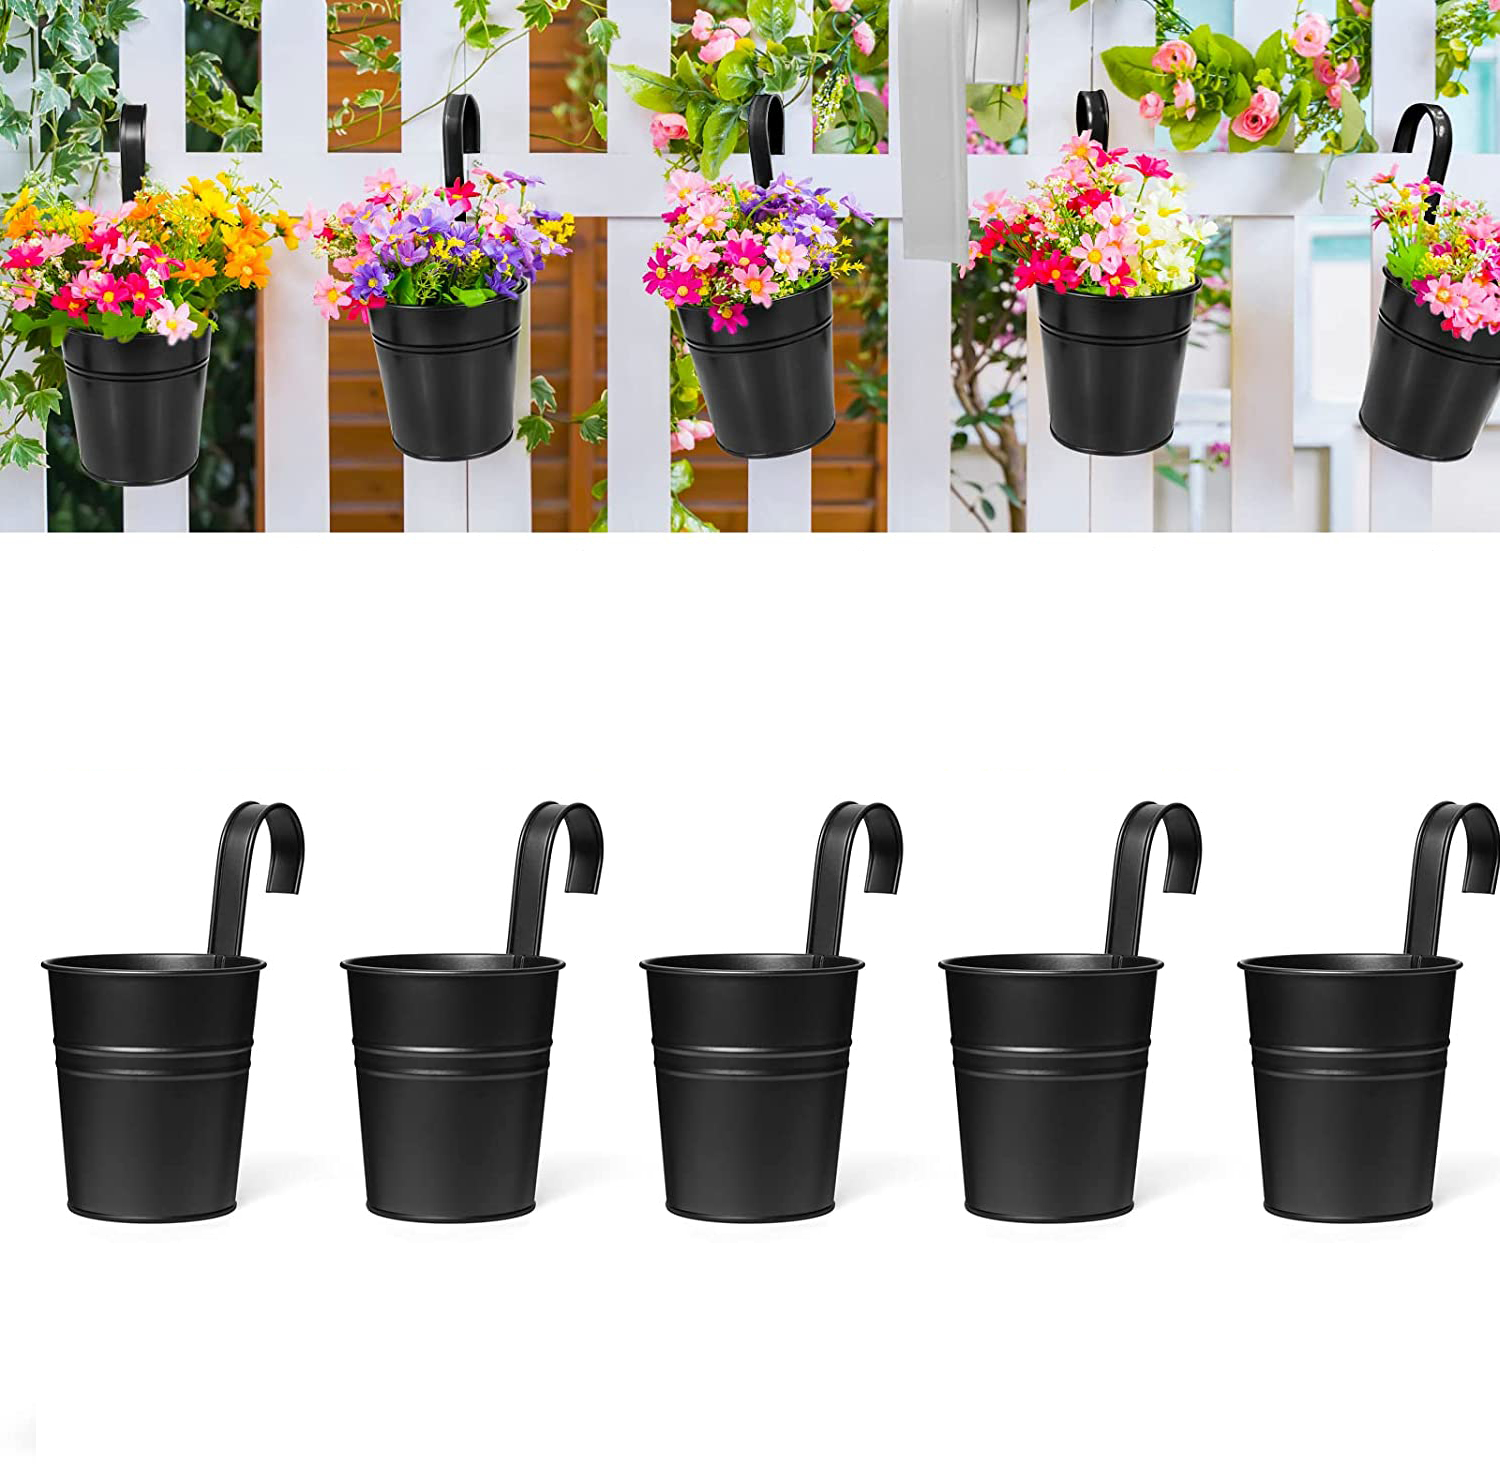 5 PCS Hanging Indoor Outdoor Flower Pots Planters, Metal Wall Plant Pots Planter Pots with Detachable Hooks & Drainage Holes, Garden Fence Balcony Window Home Decor, Storage Bucket Barrel - image 1 of 6